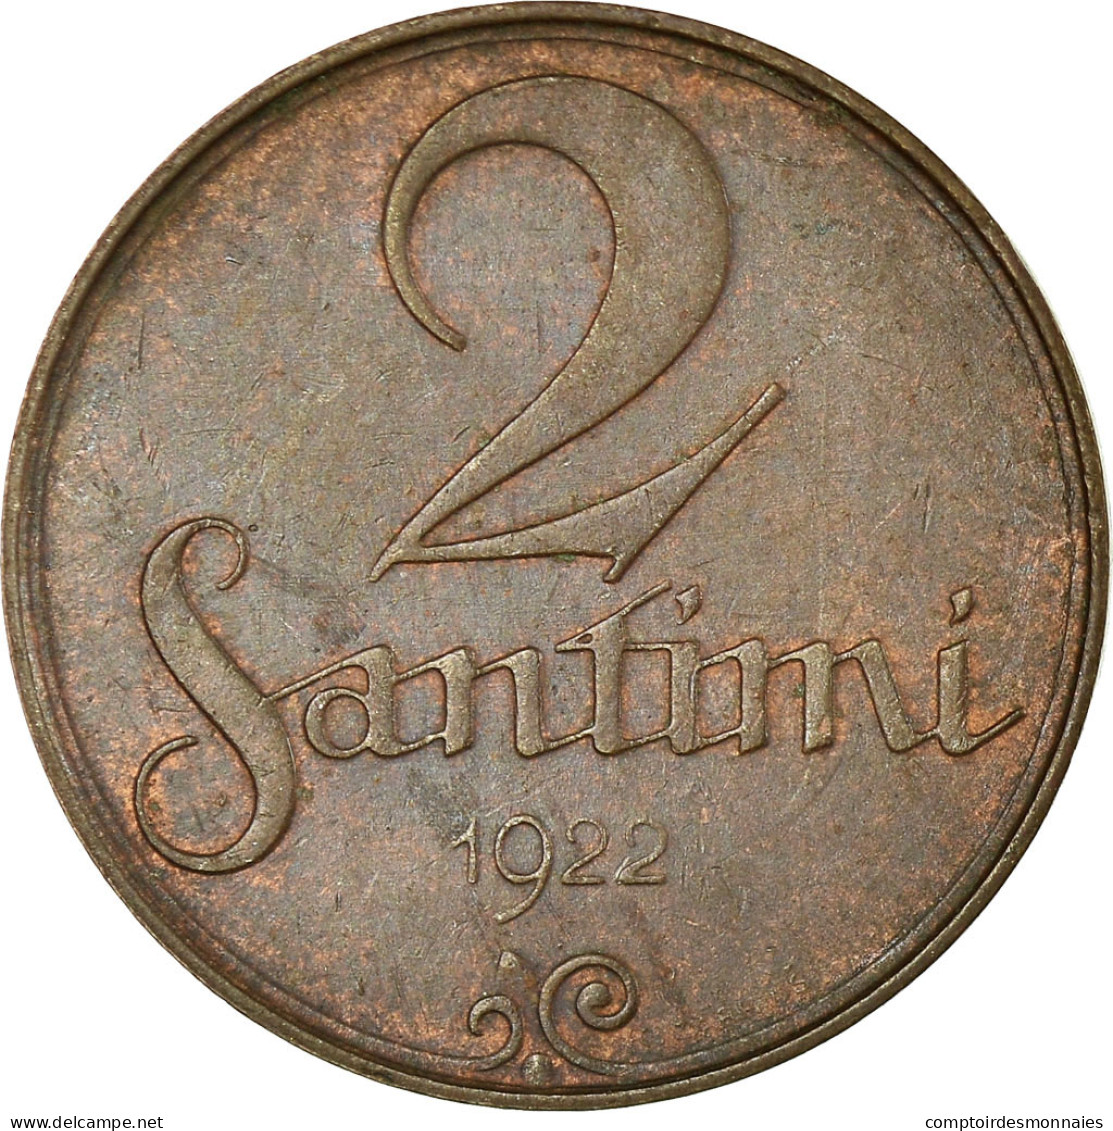 Monnaie, Latvia, 2 Santimi, 1922, TTB, Bronze, KM:2 - Latvia